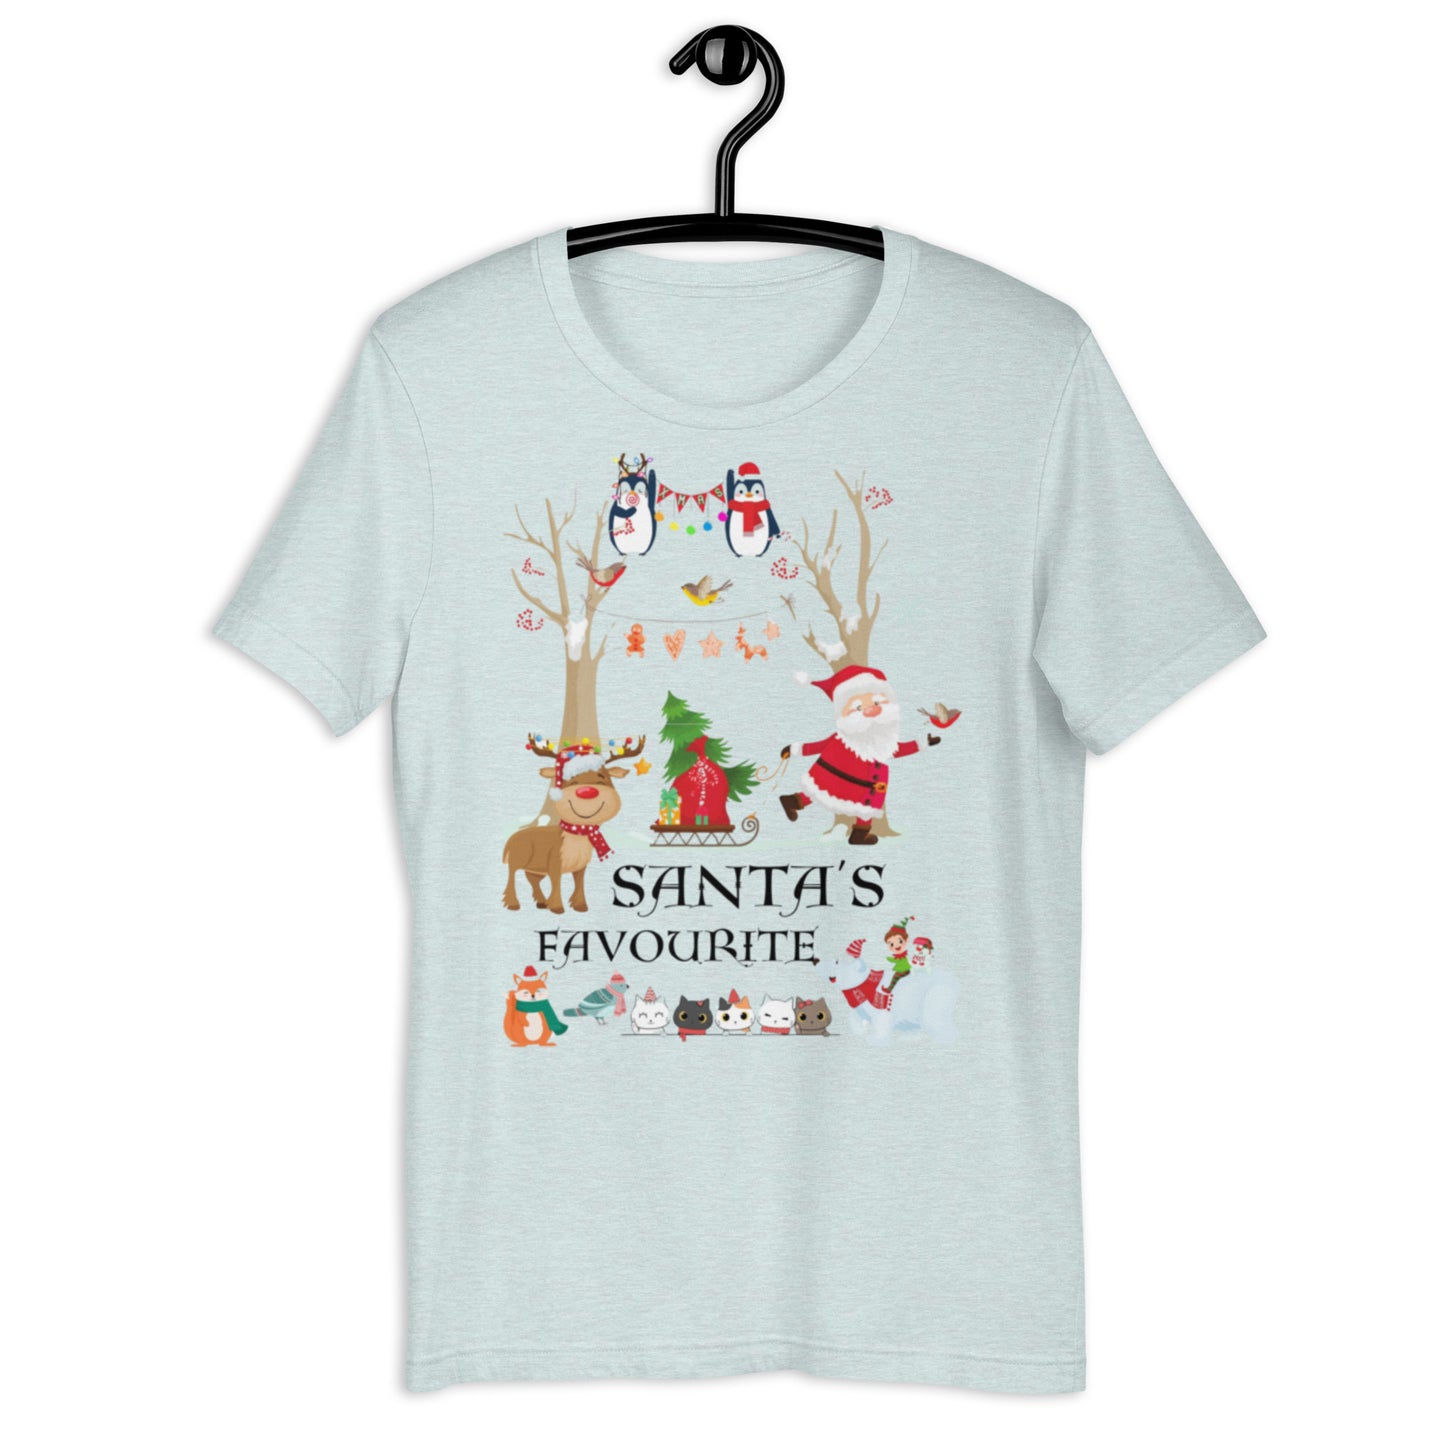 Santa's Fav Unisex t-shirt